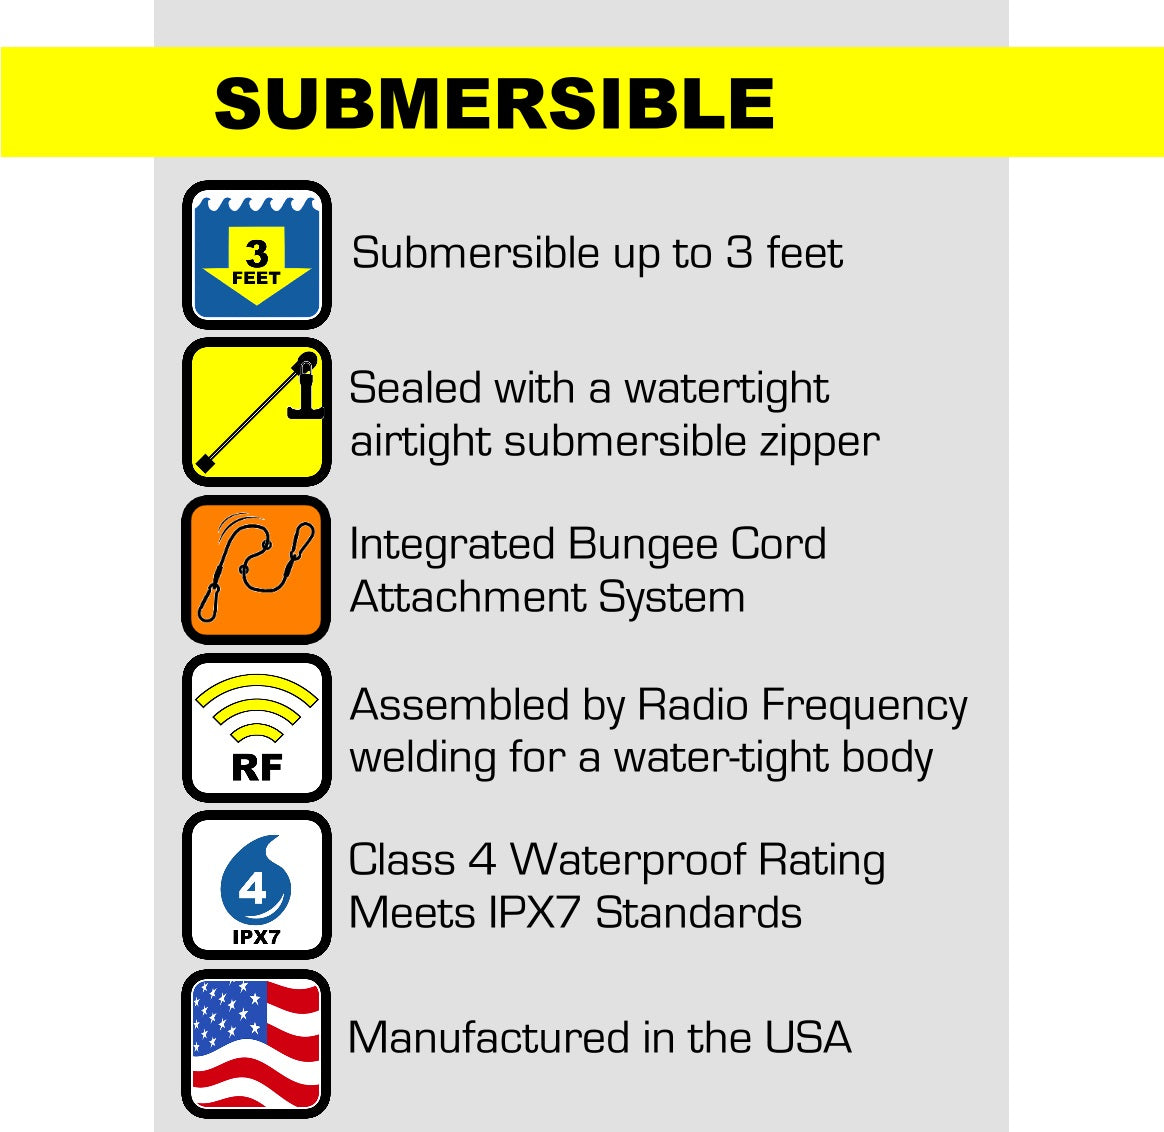 Submersible Waterproof Deck Bag features list